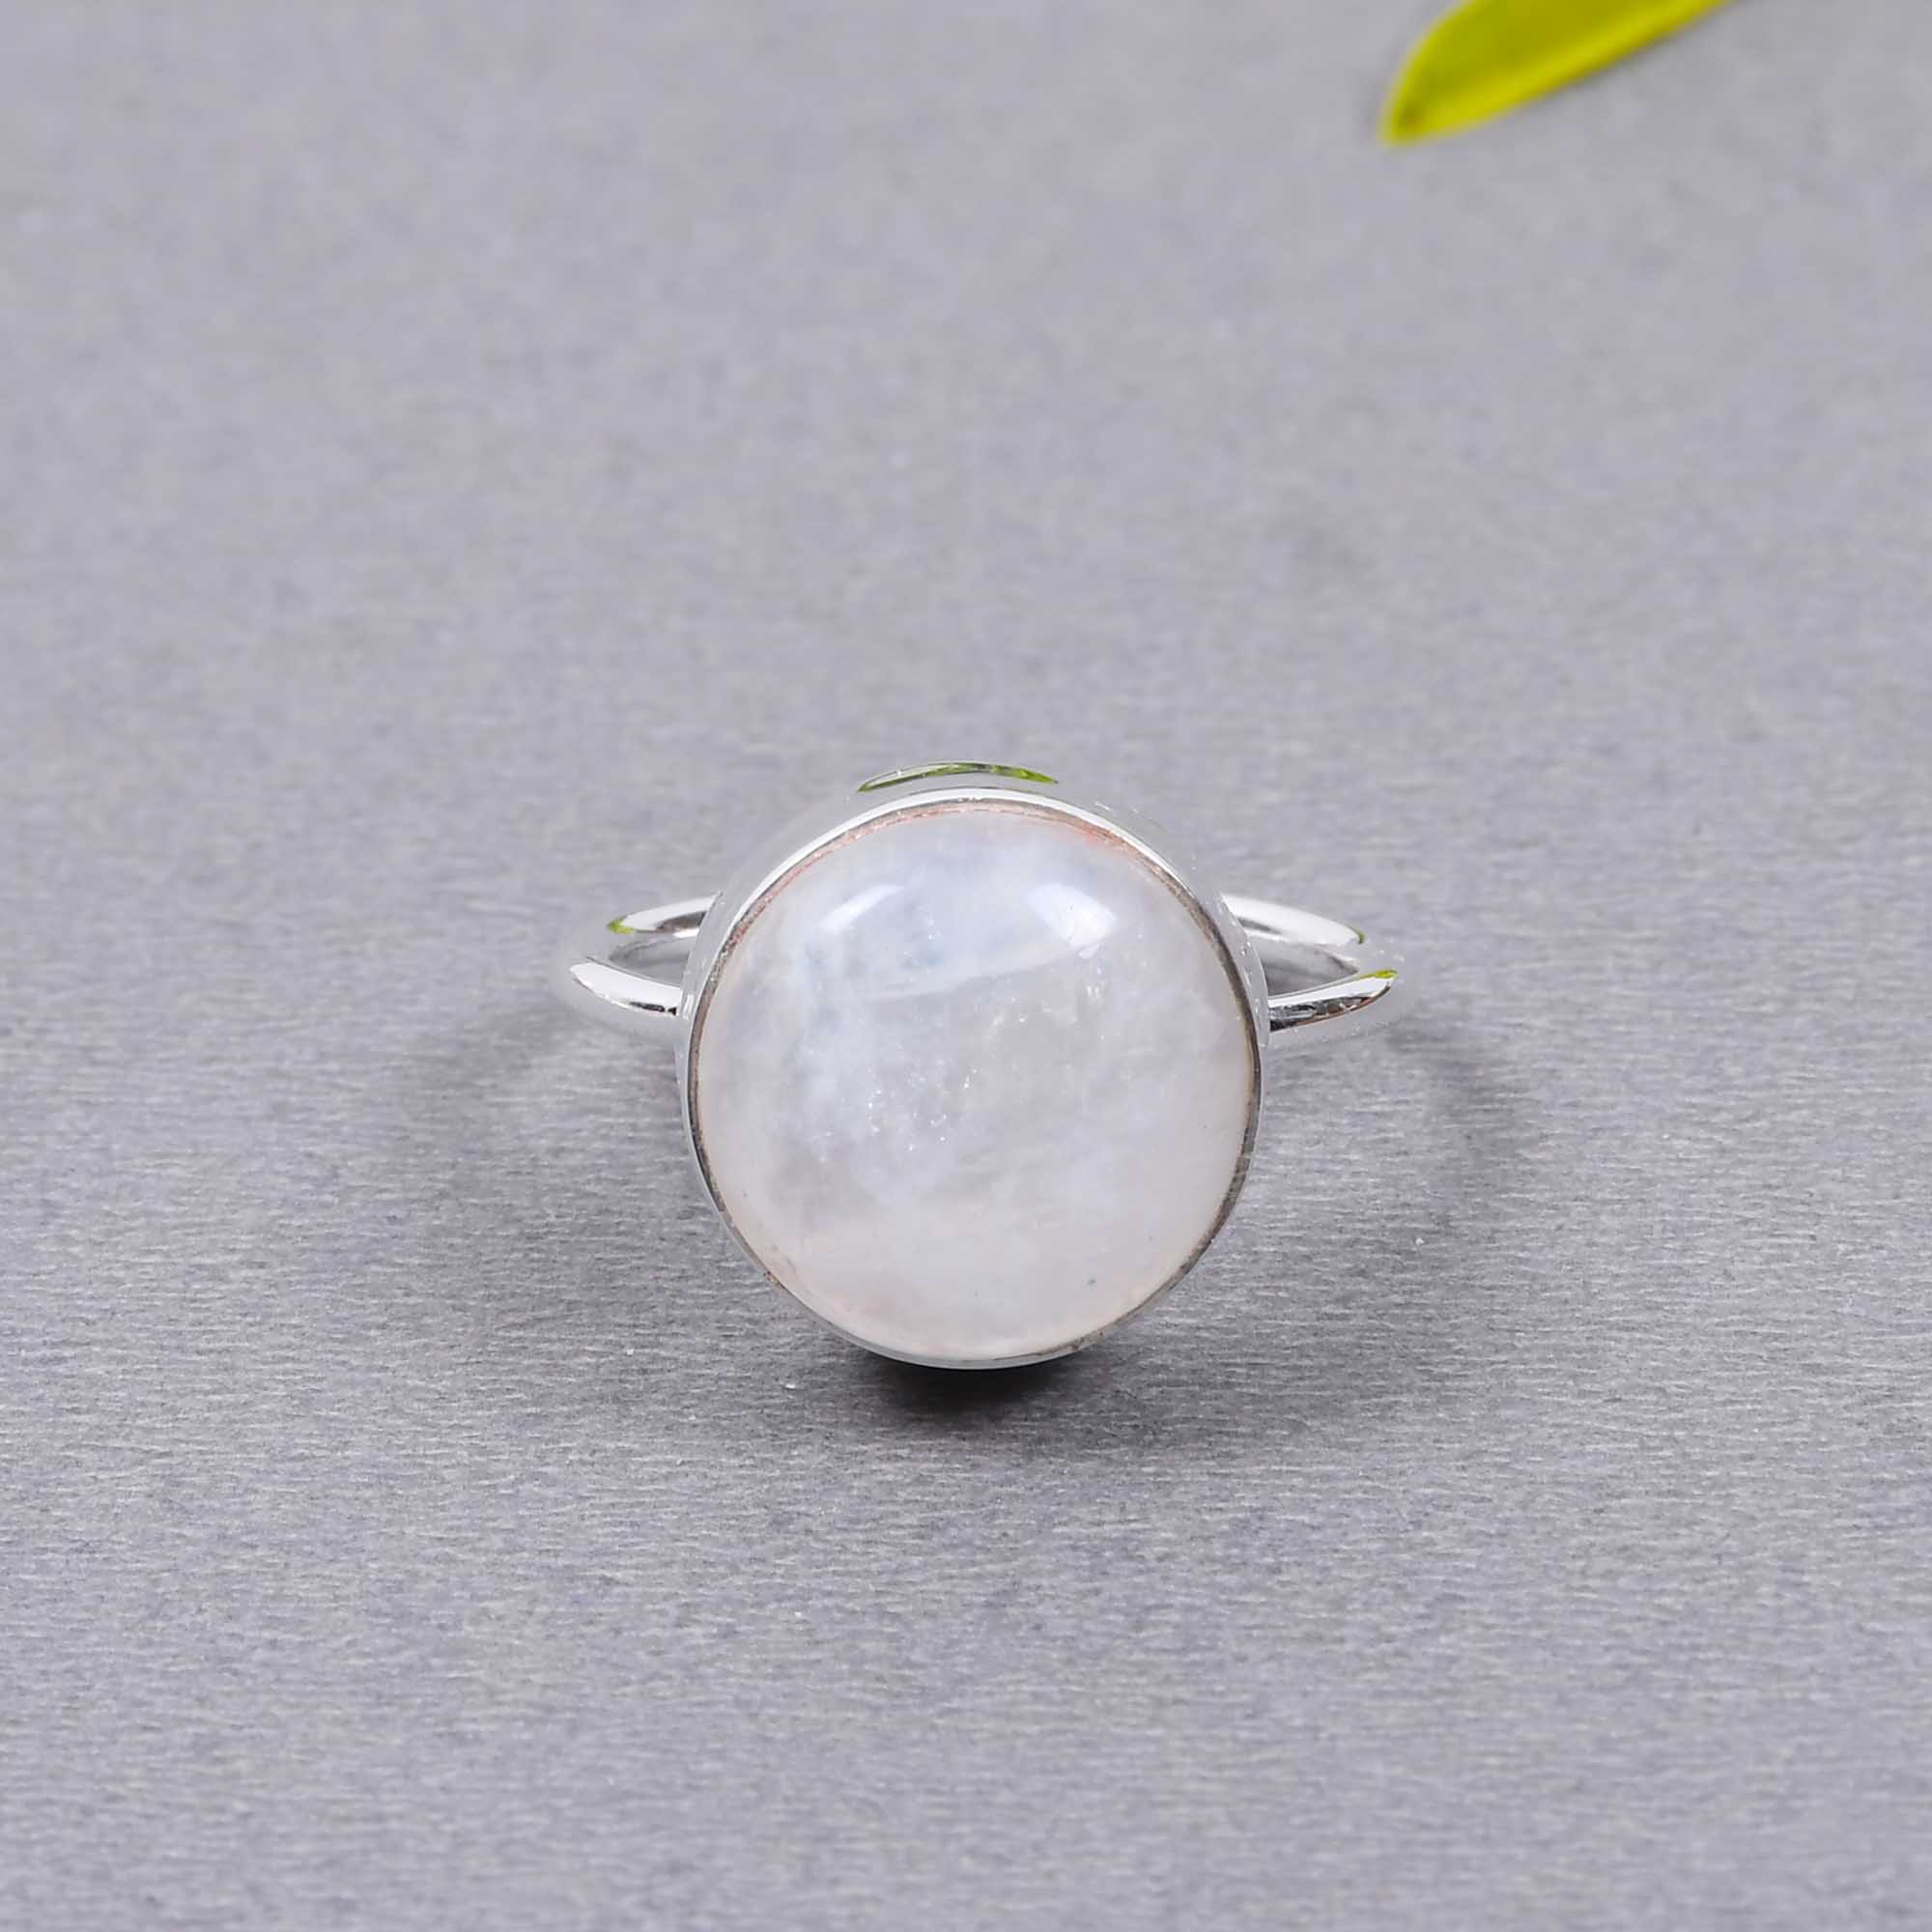 Buy Stone Pattern Ring, Men Handmade Silver Ring, Patterned Model Handmade Silver  Ring, Soil Patterned Ring, Shiny Silver Ring, Gift for Him Online in India  - Etsy